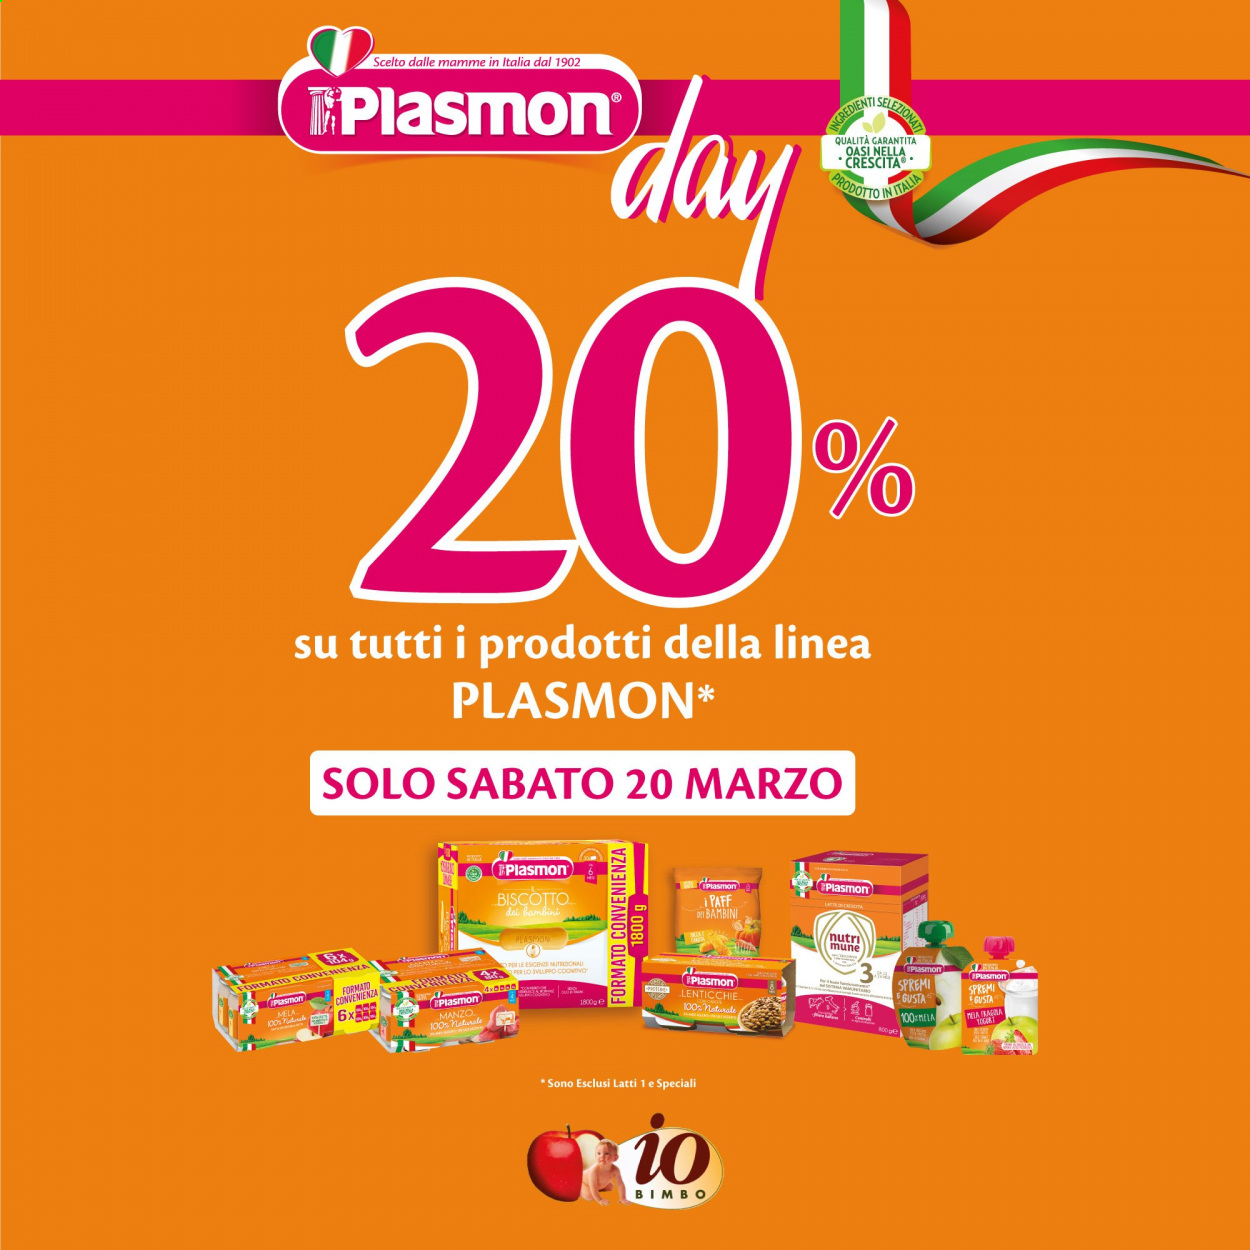 thumbnail - Volantino Io Bimbo - 20/3/2021 - 20/3/2021 - Prodotti in offerta - biscotti, Plasmon, i Paff. Pagina 1.